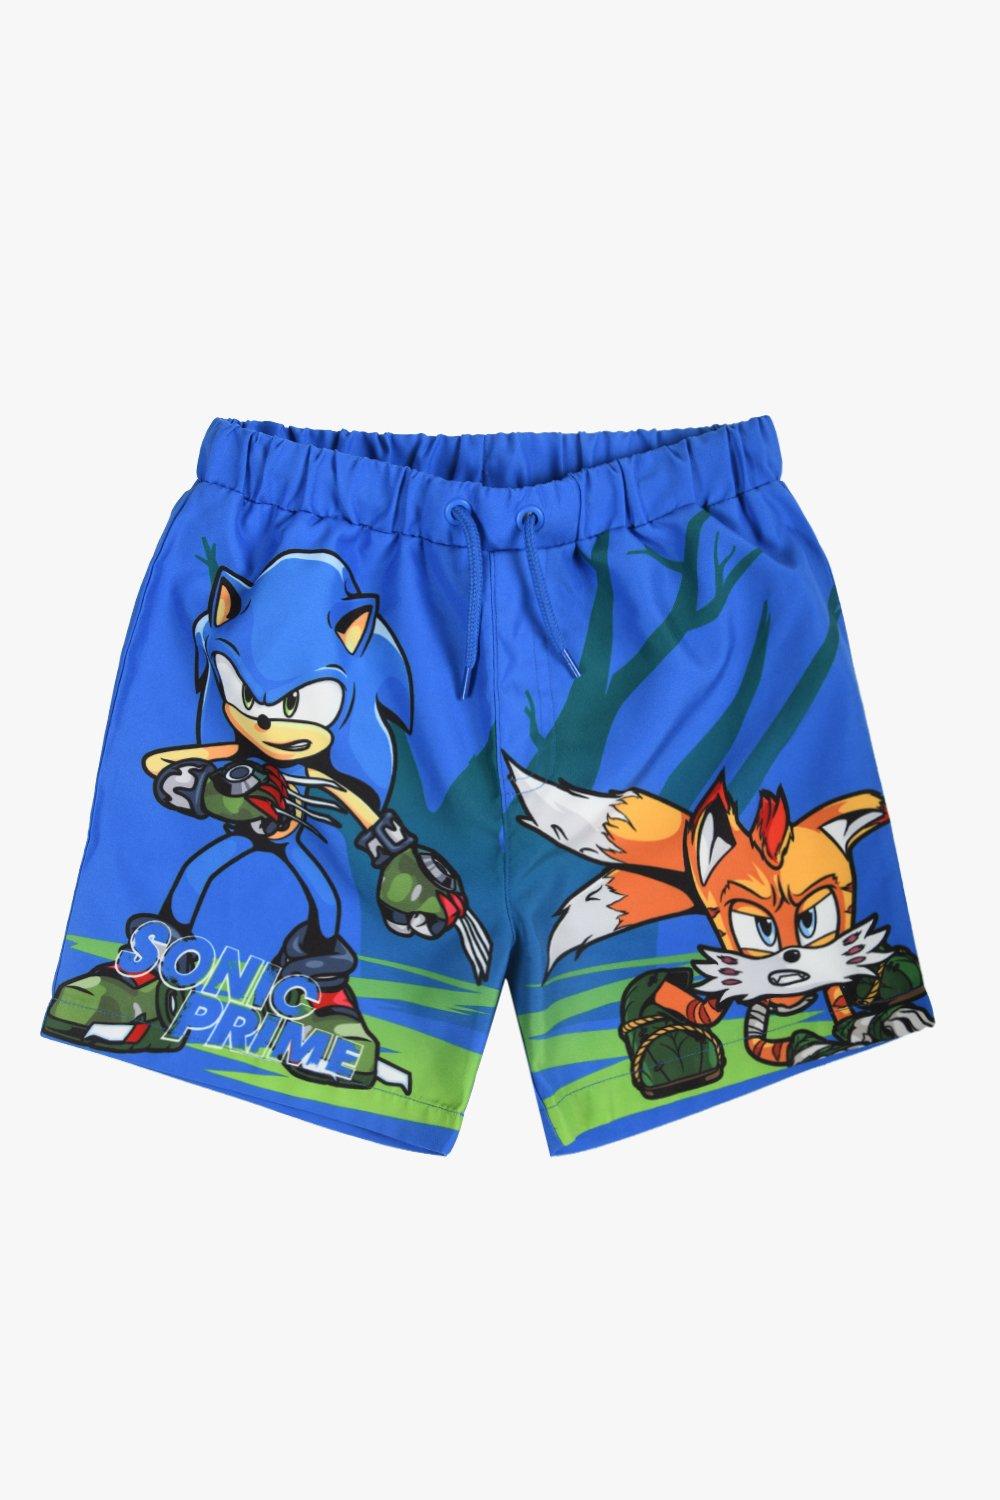 Sonic Prime Swim Shorts